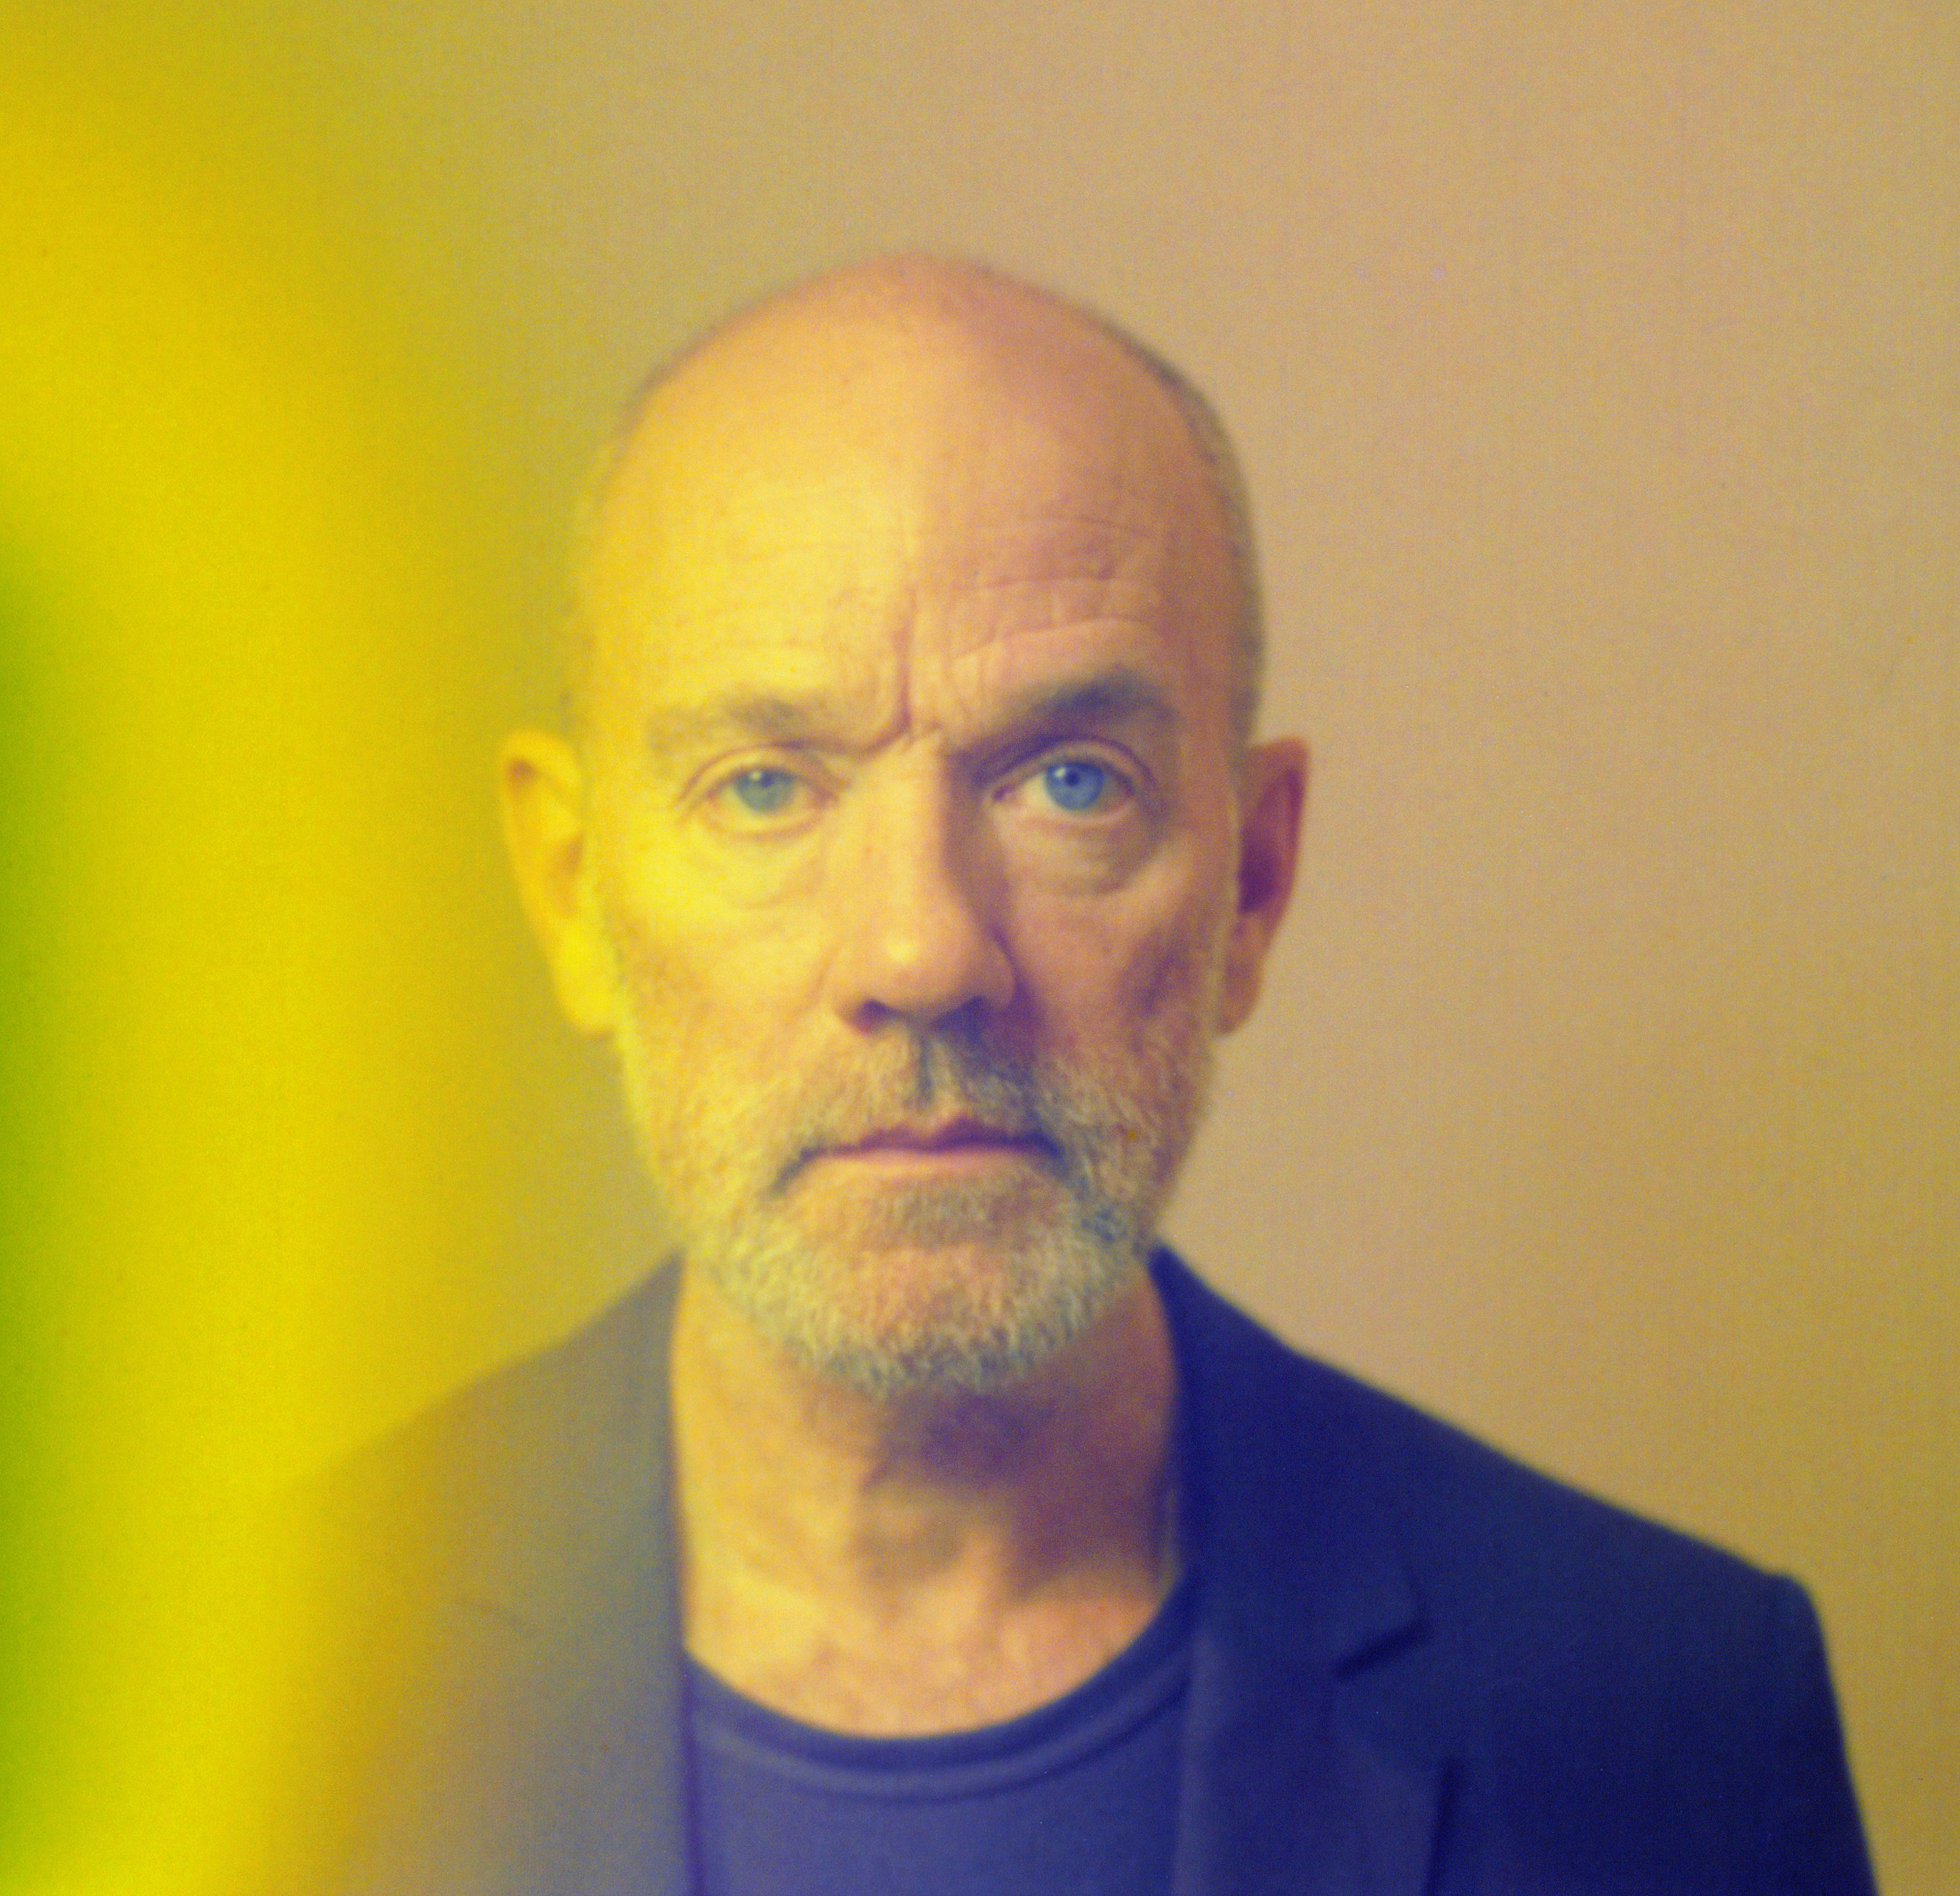 Michael Stipe self-portrait polaroid